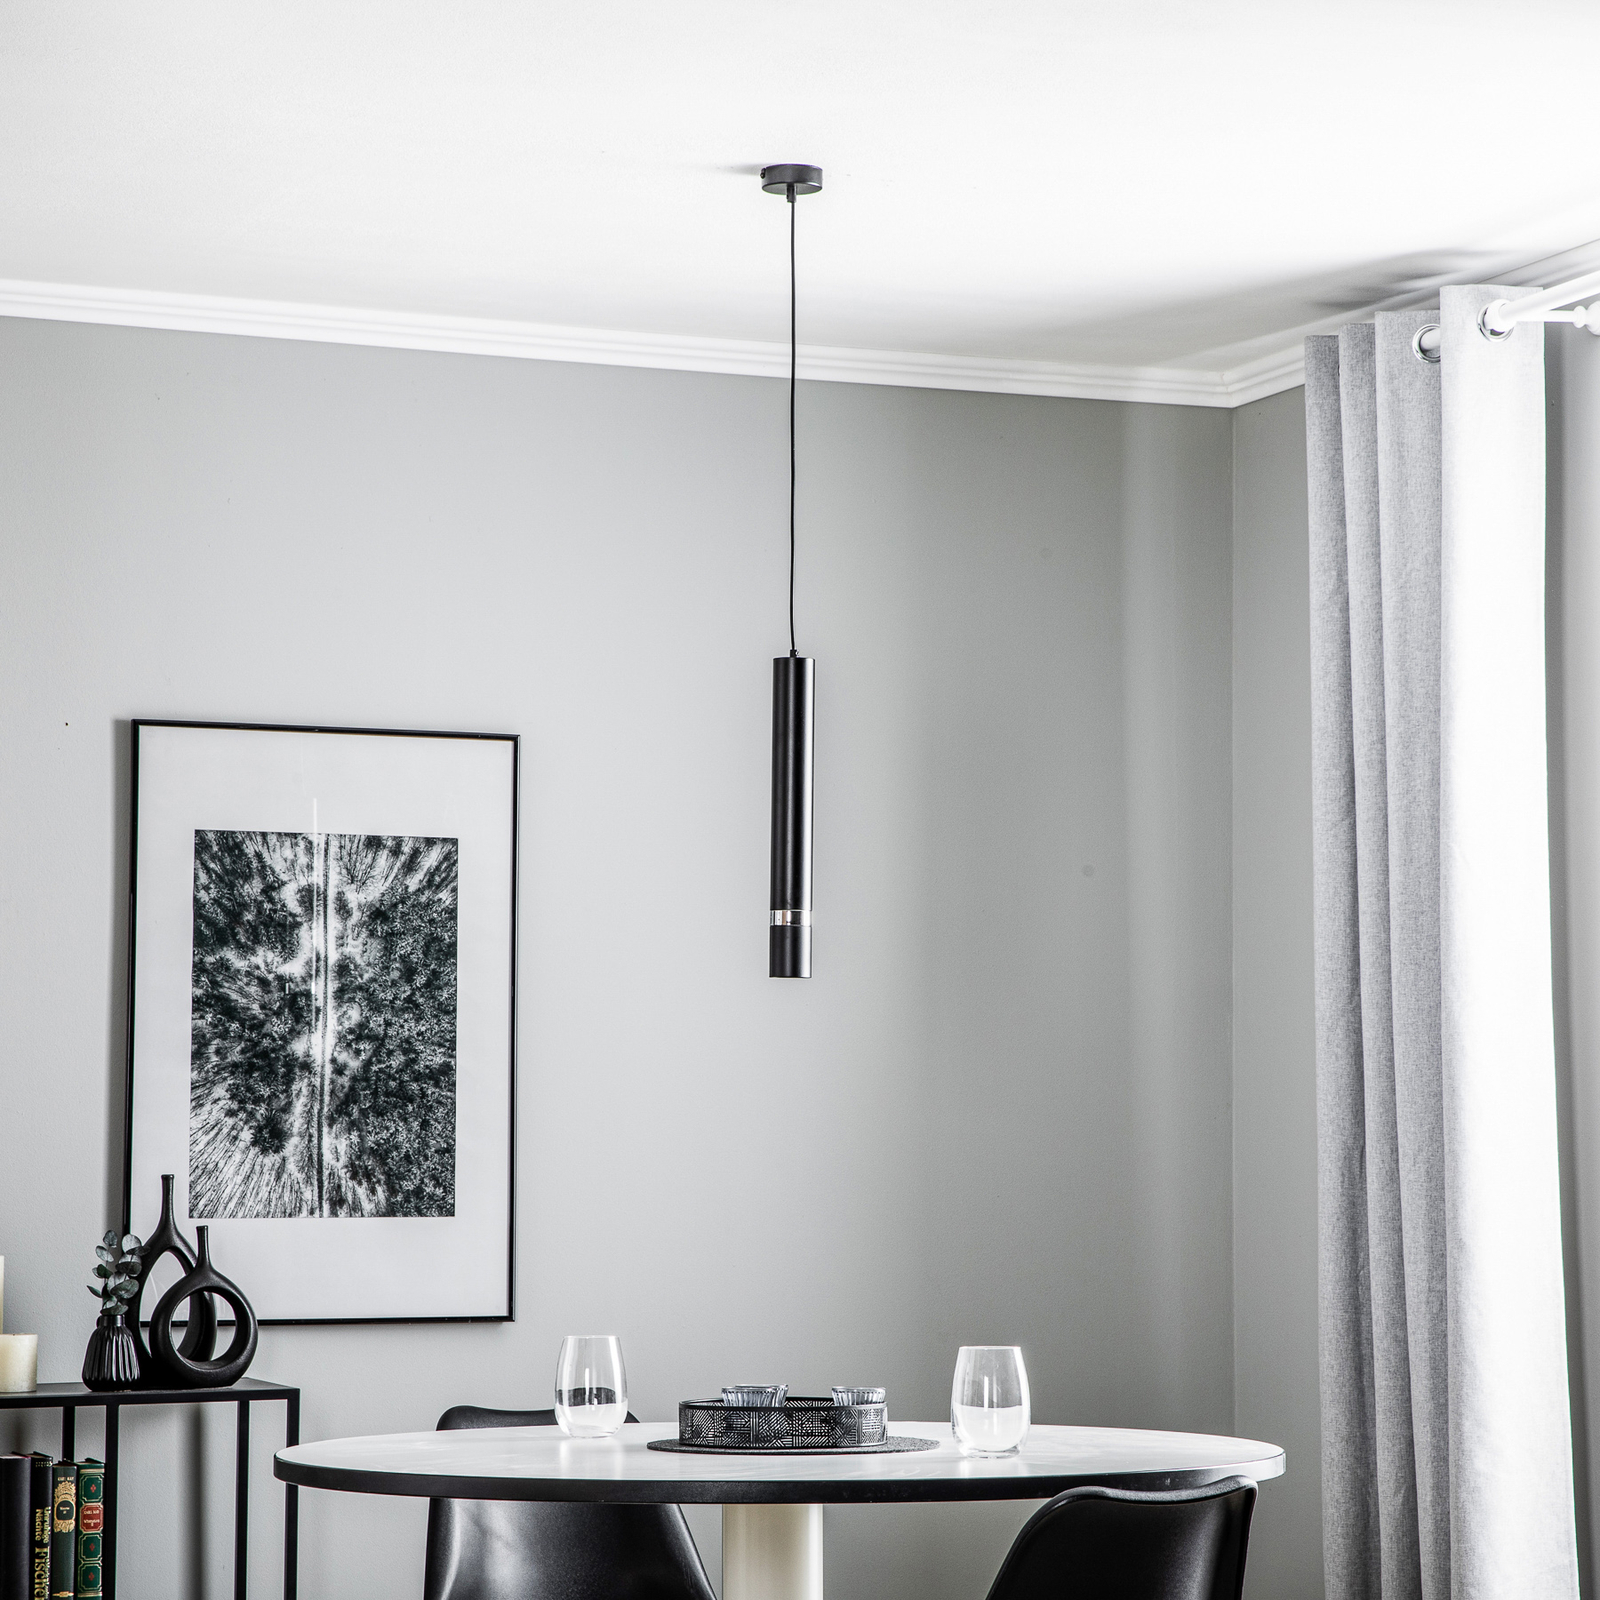 Rondo hanglamp zwart/chroom, 1-lamp